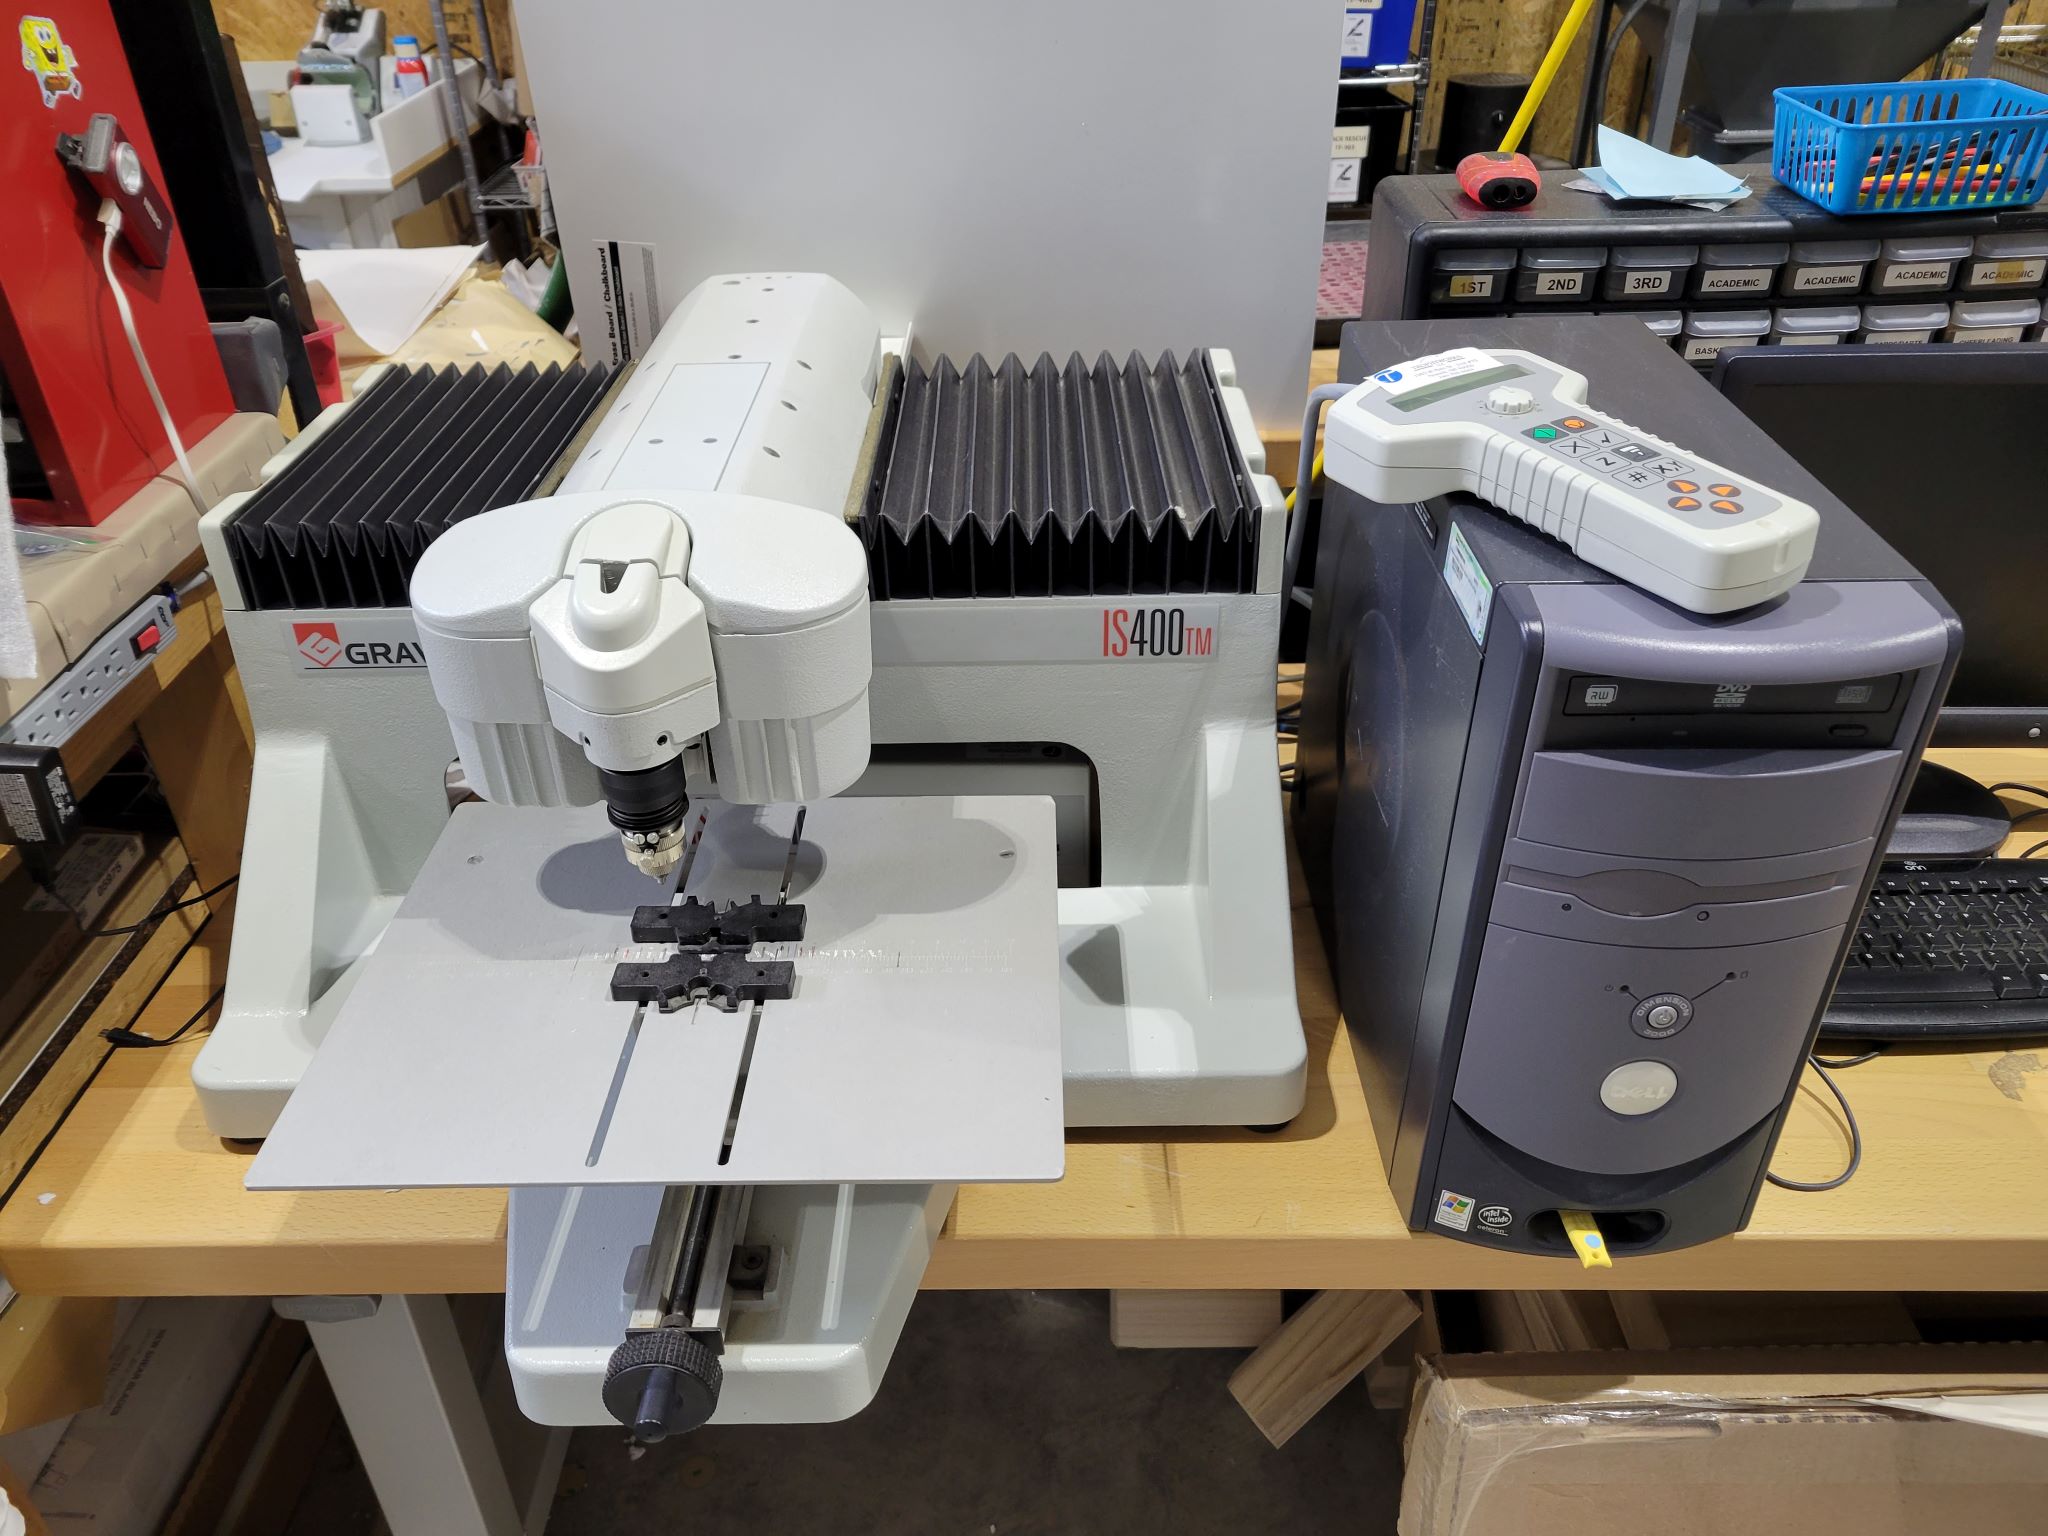 Equipment Lot: Gravograph IS400 Trophy Master Rotary Engraving Machine & GCC Jaguar V LX 24″ Vinyl Cutter Plotter (Used) Item # UE-020124B